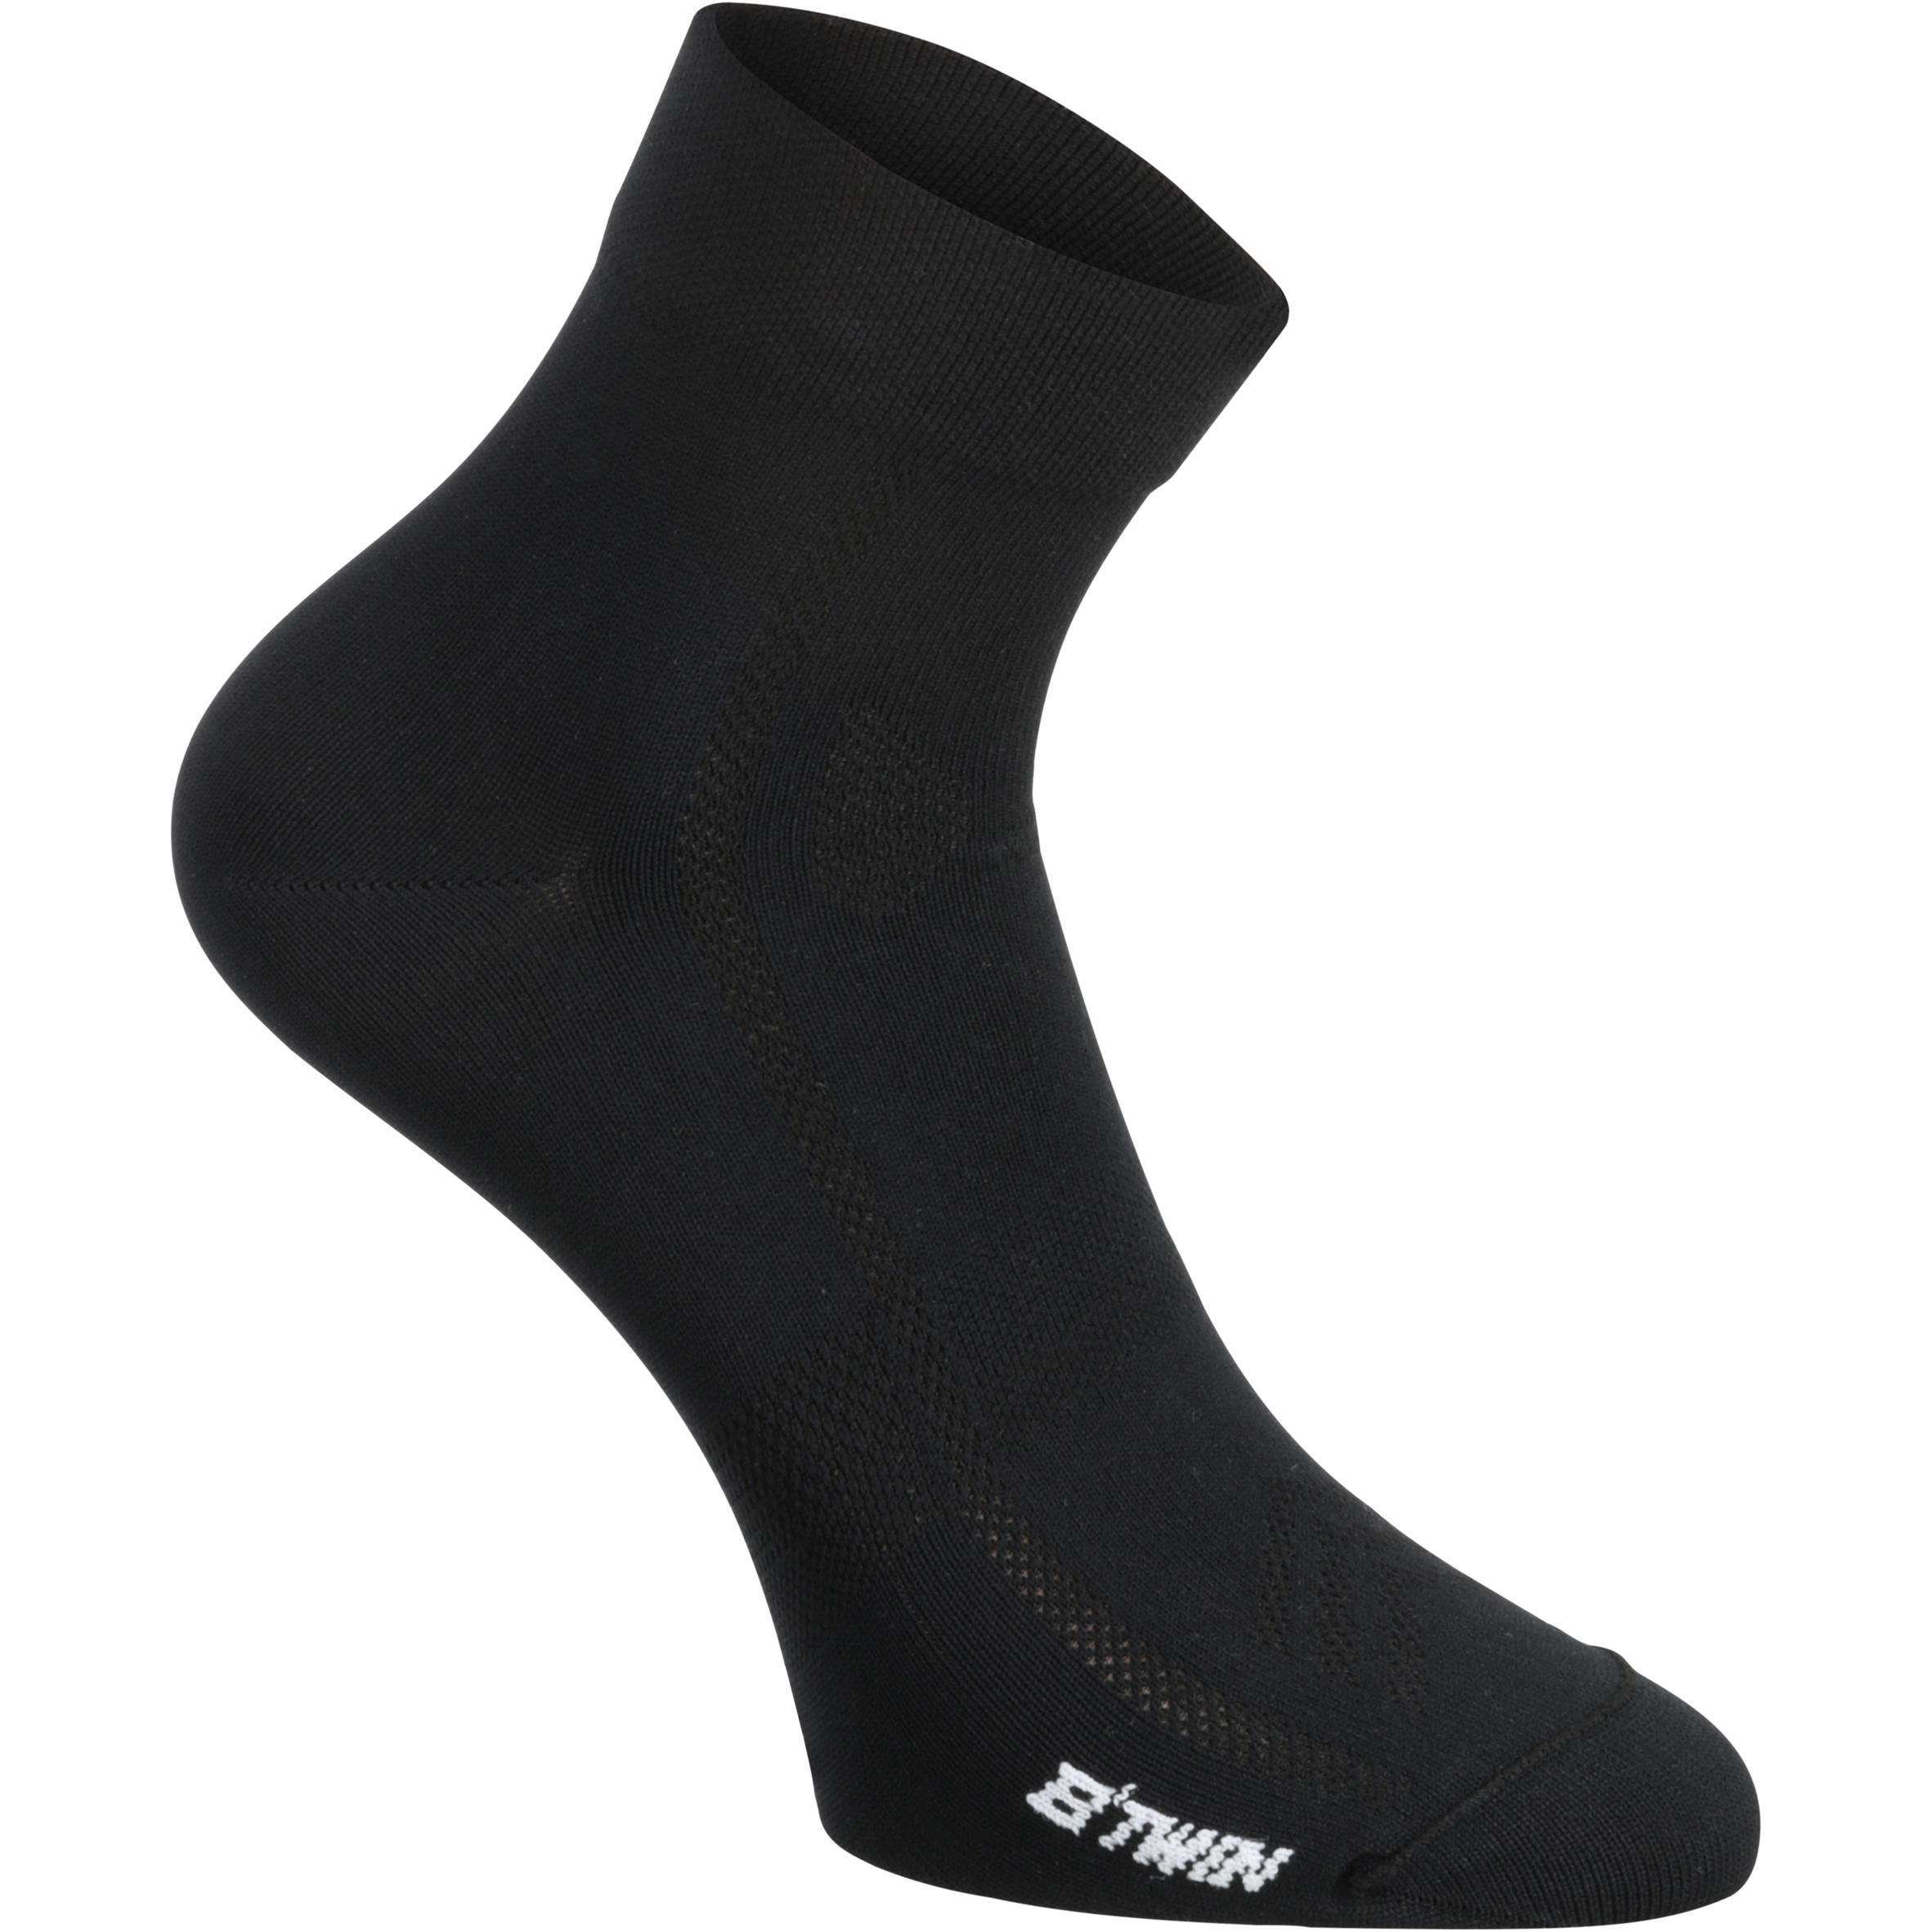 VAN RYSEL RoadR 500 Cycling Socks - Black